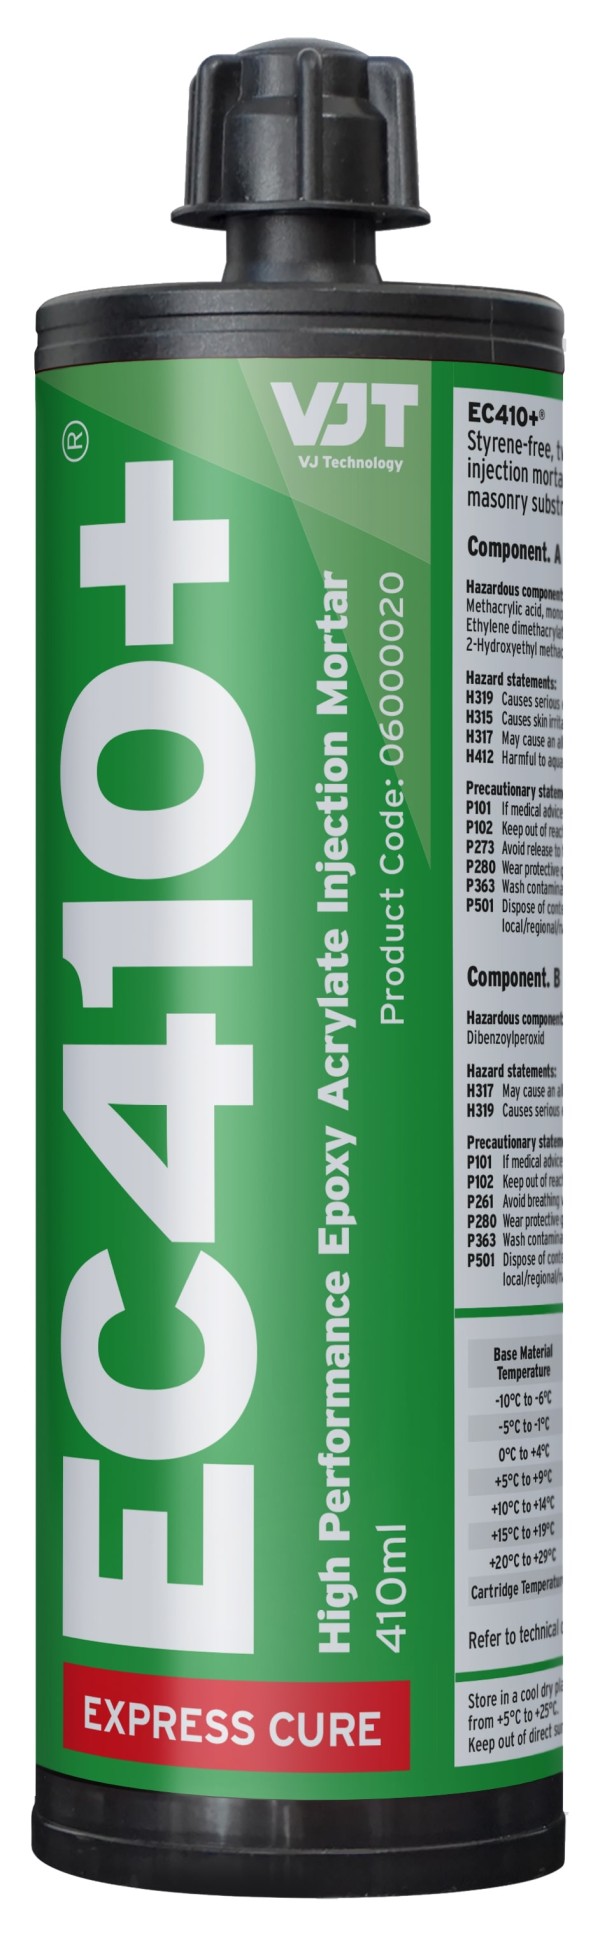 E410+® / EC410+® Epoxy Acrylate Resin Cartridge